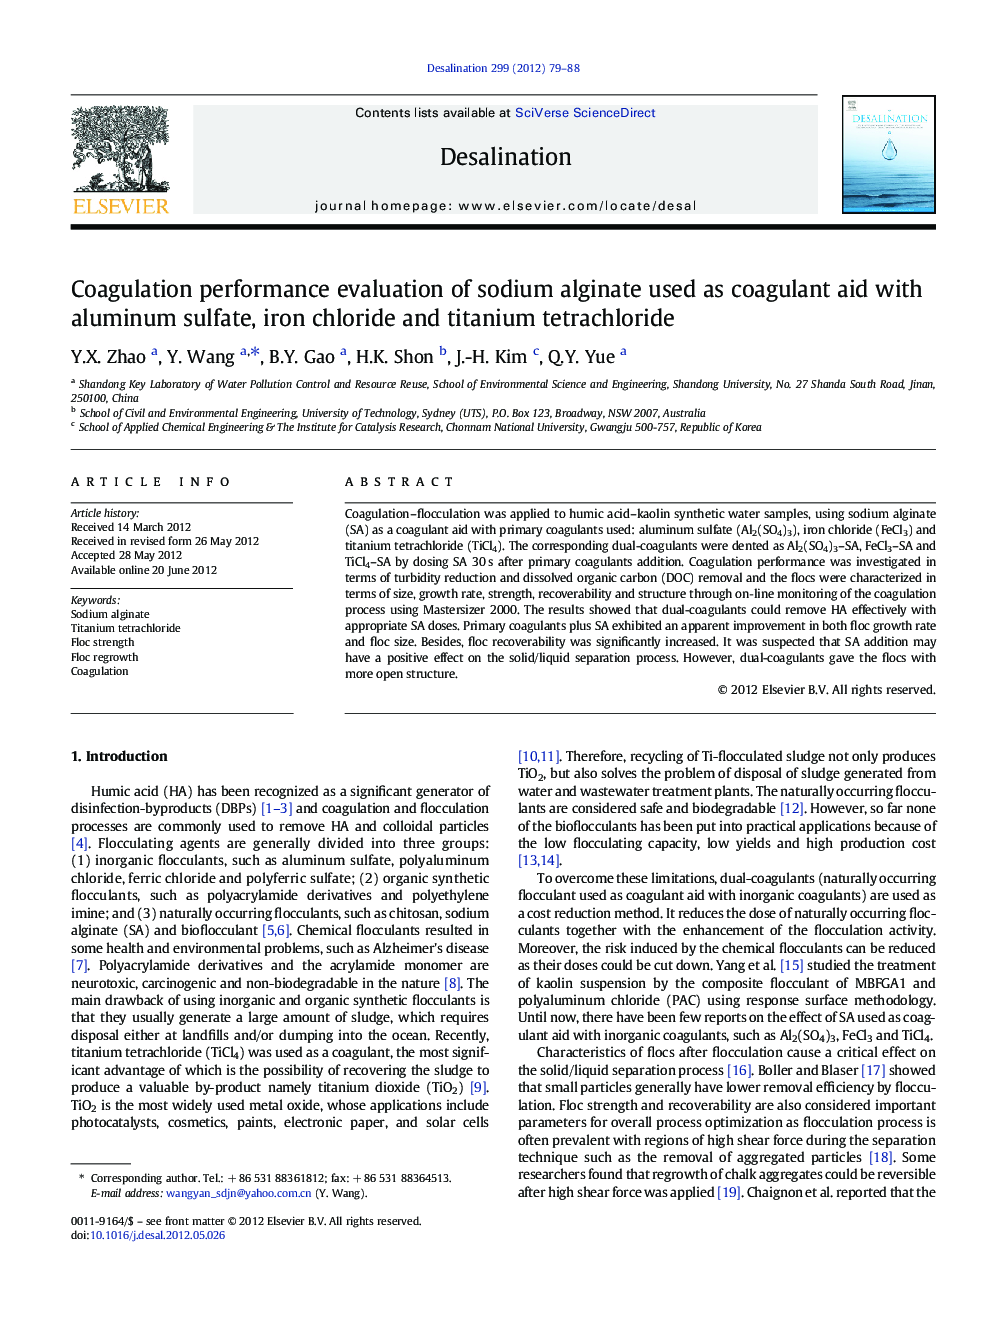 Coagulation performance evaluation of sodium alginate used as coagulant aid with aluminum sulfate, iron chloride and titanium tetrachloride